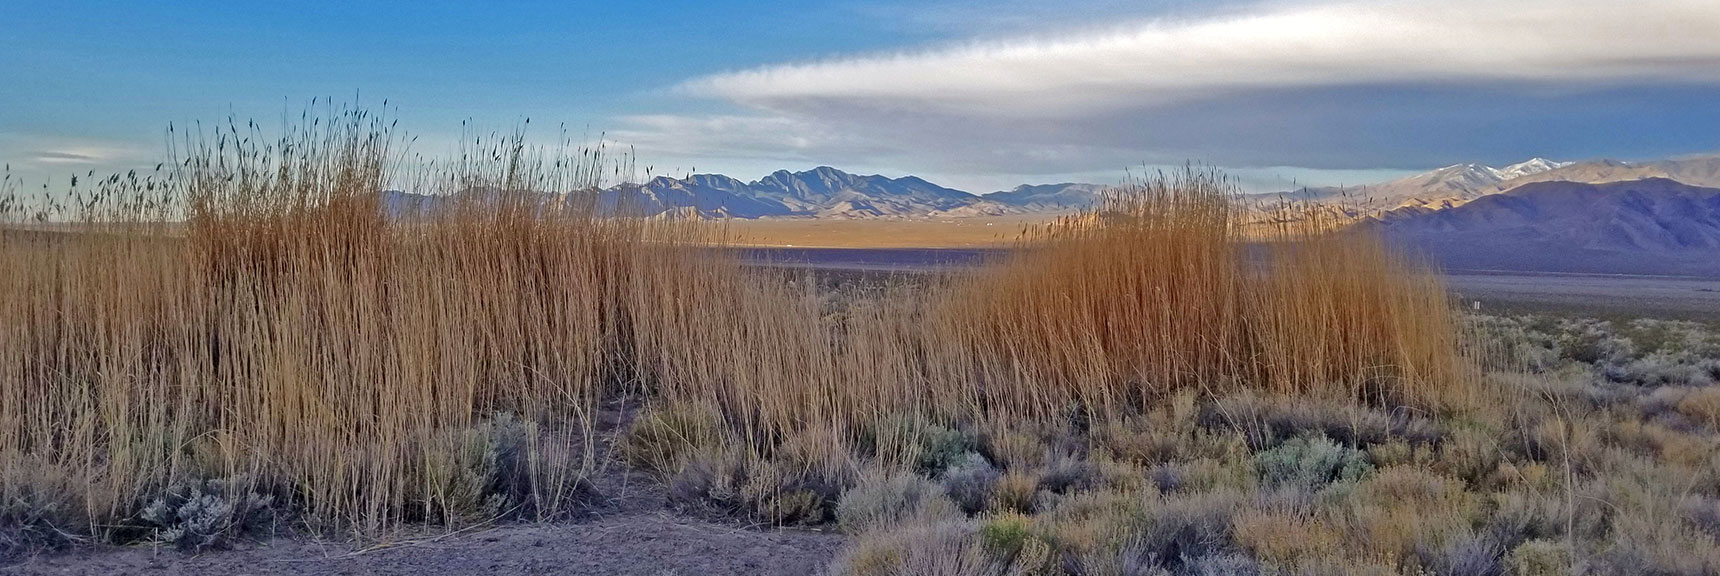 Surrounding Desert Barren Scrub Brush, La Madre Mountains Wilderness in Background | Fossil Ridge End to End | Sheep Range | Desert National Wildlife Refuge, Nevada